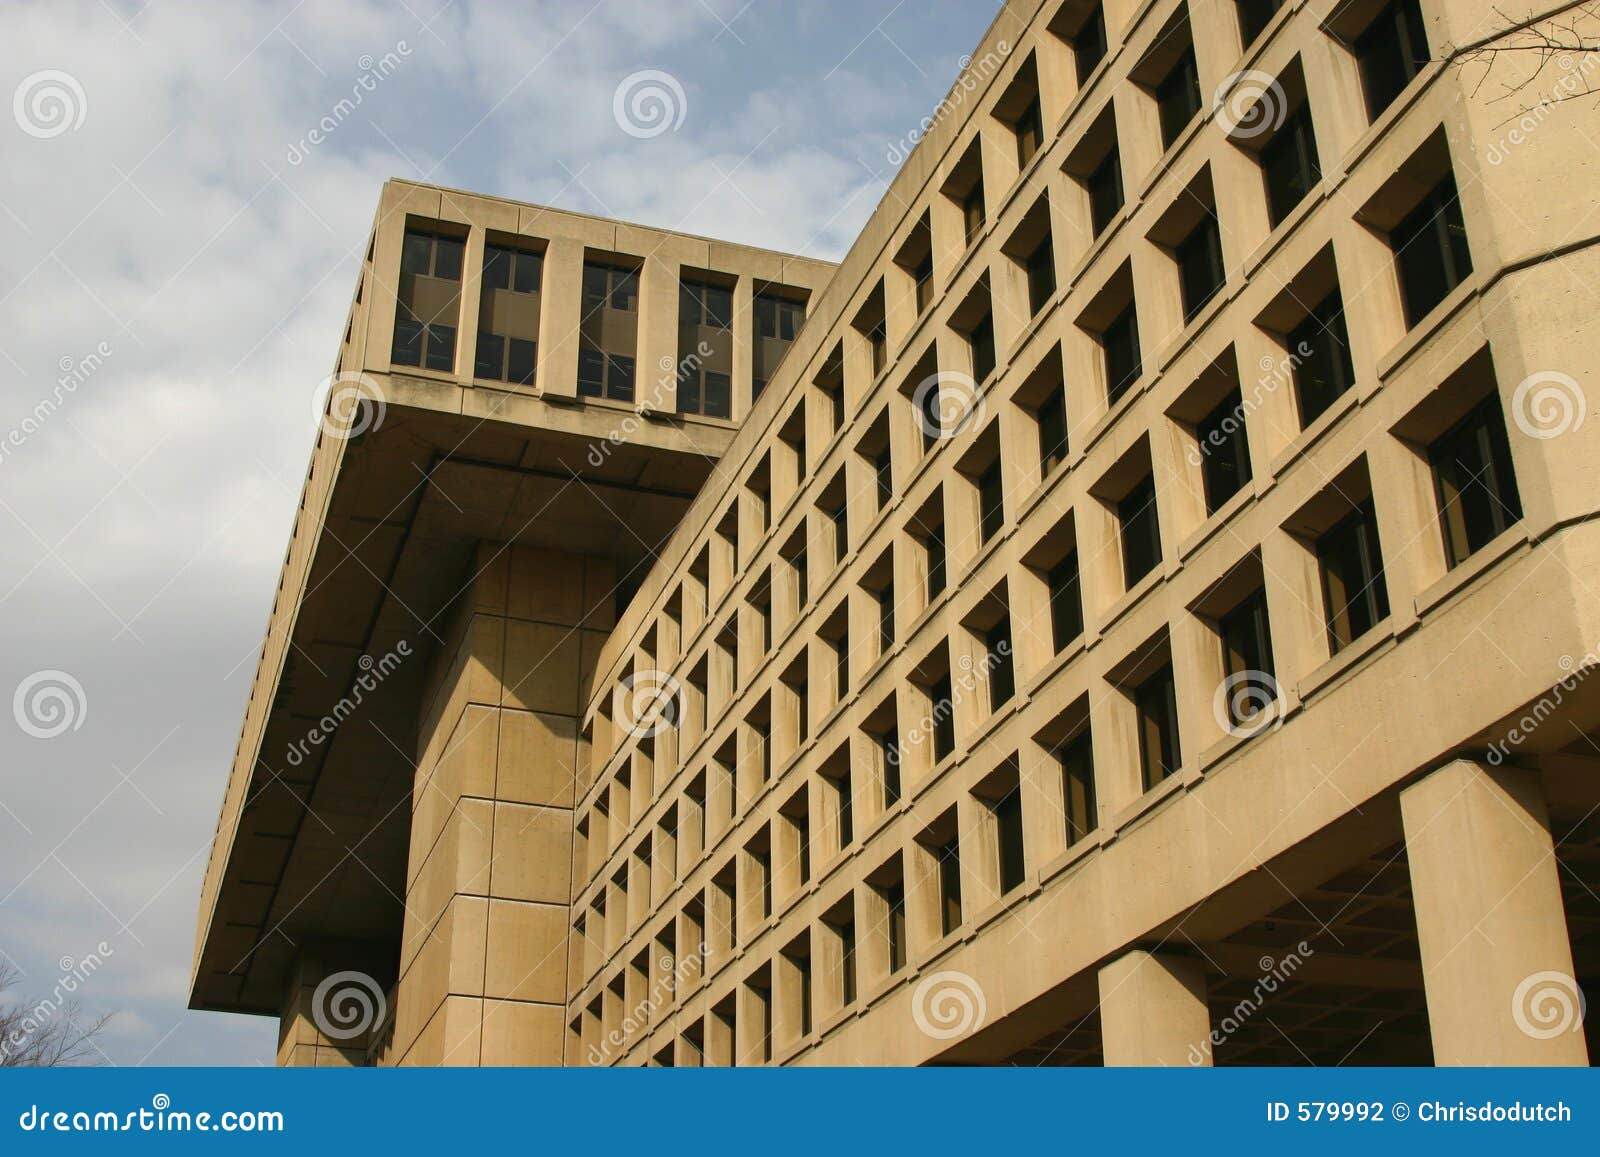 fbi building